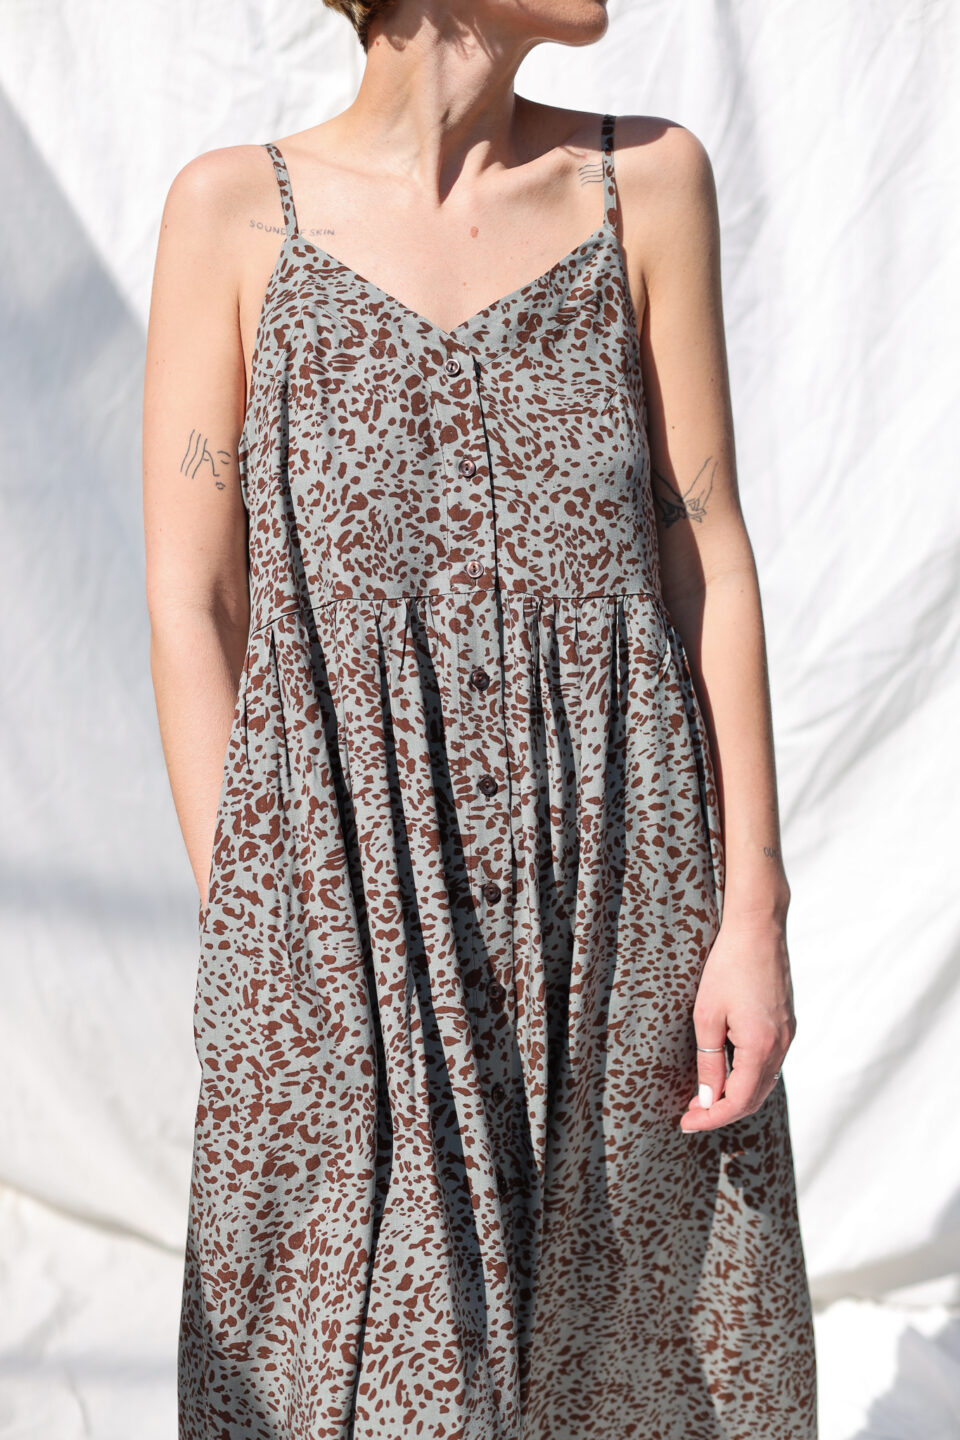 Viscose animal print adjustable straps summer dress | Dress | Sustainable clothing | OffOn clothing